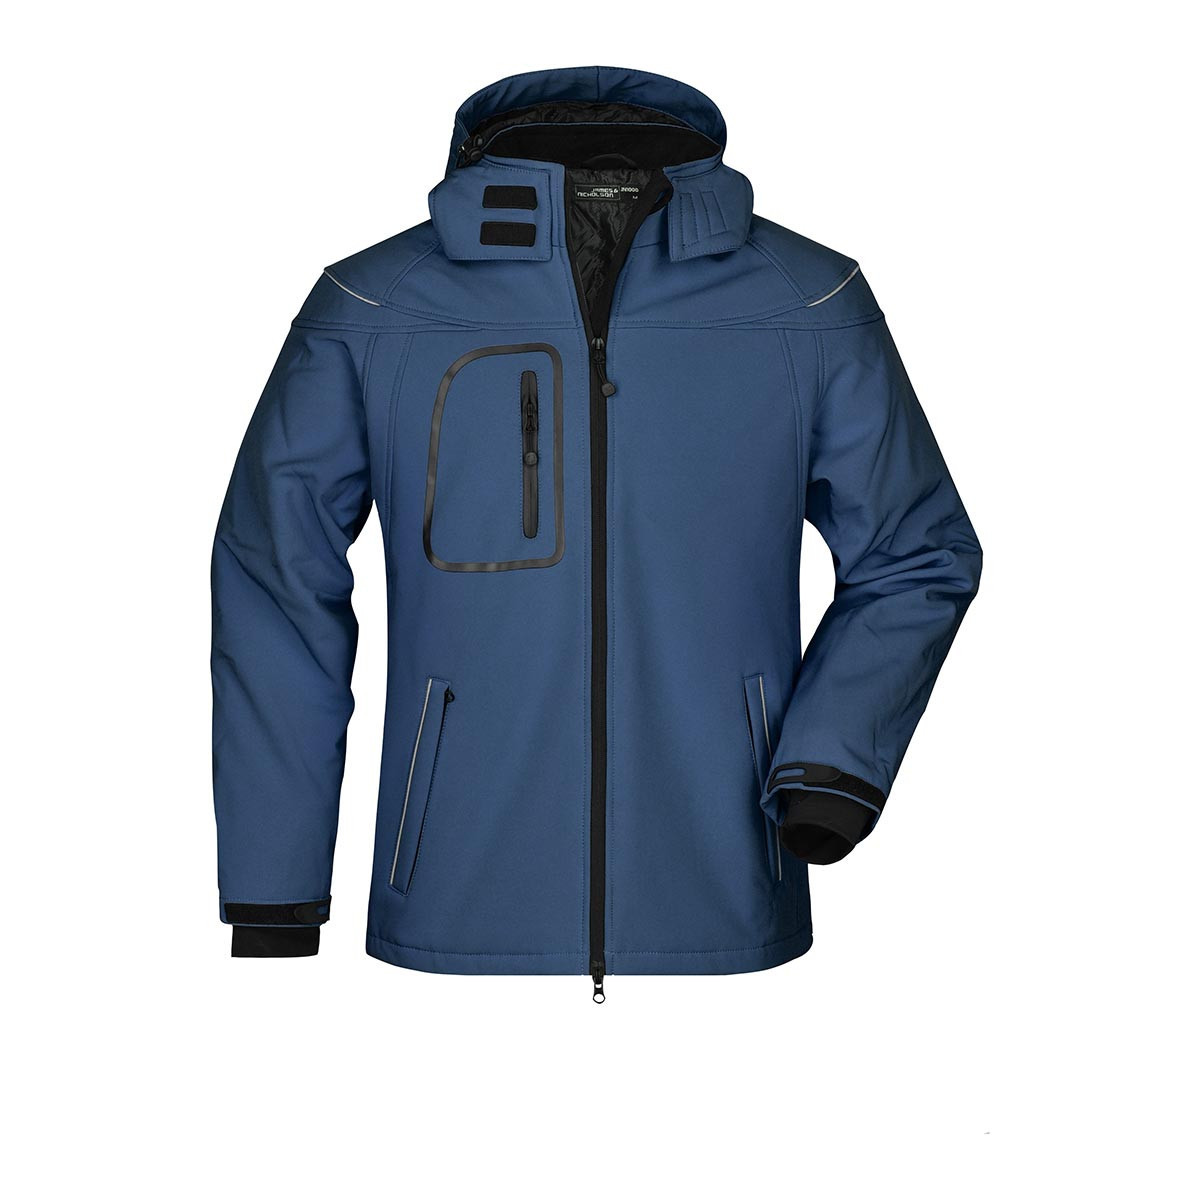 J&N Men's Winter Jacket: The Pinnacle of Customizable Corporate and Workwear